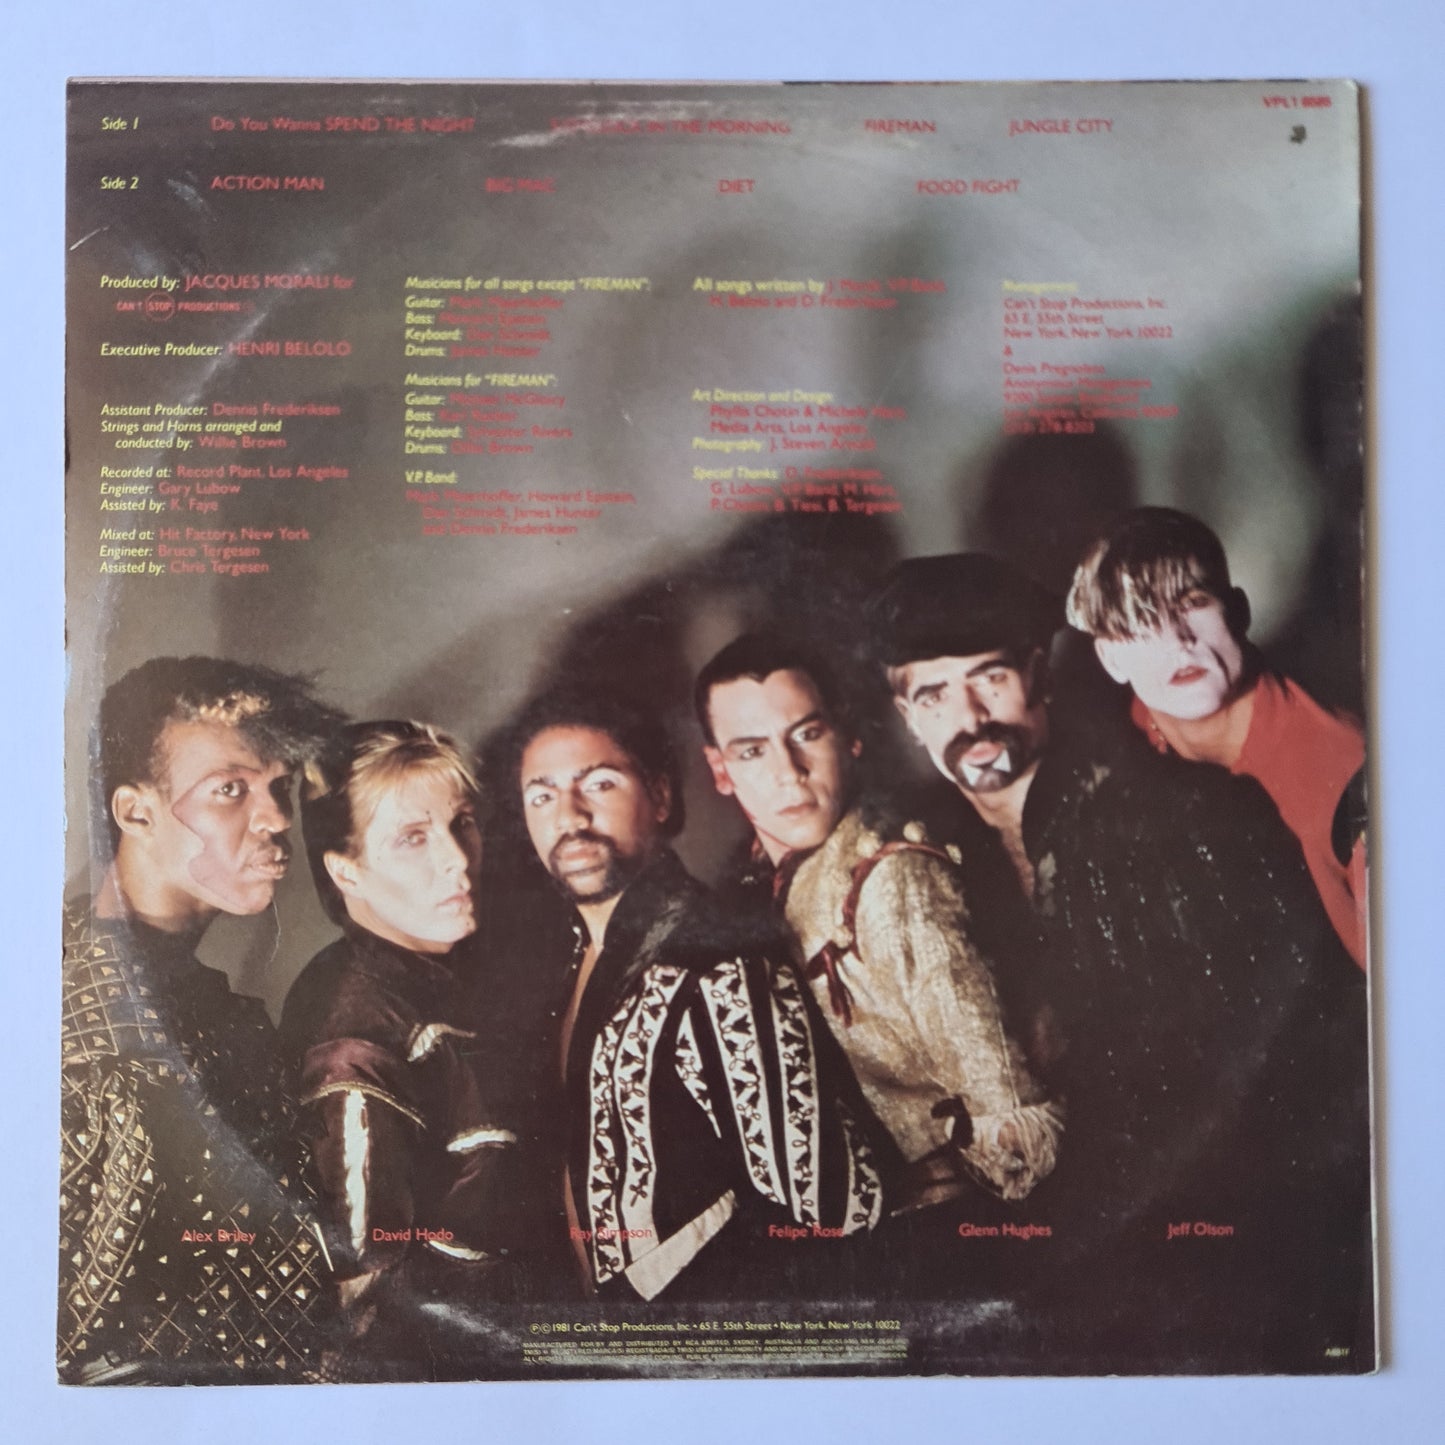 Village People – Renaissance - 1981 - Vinyl Record